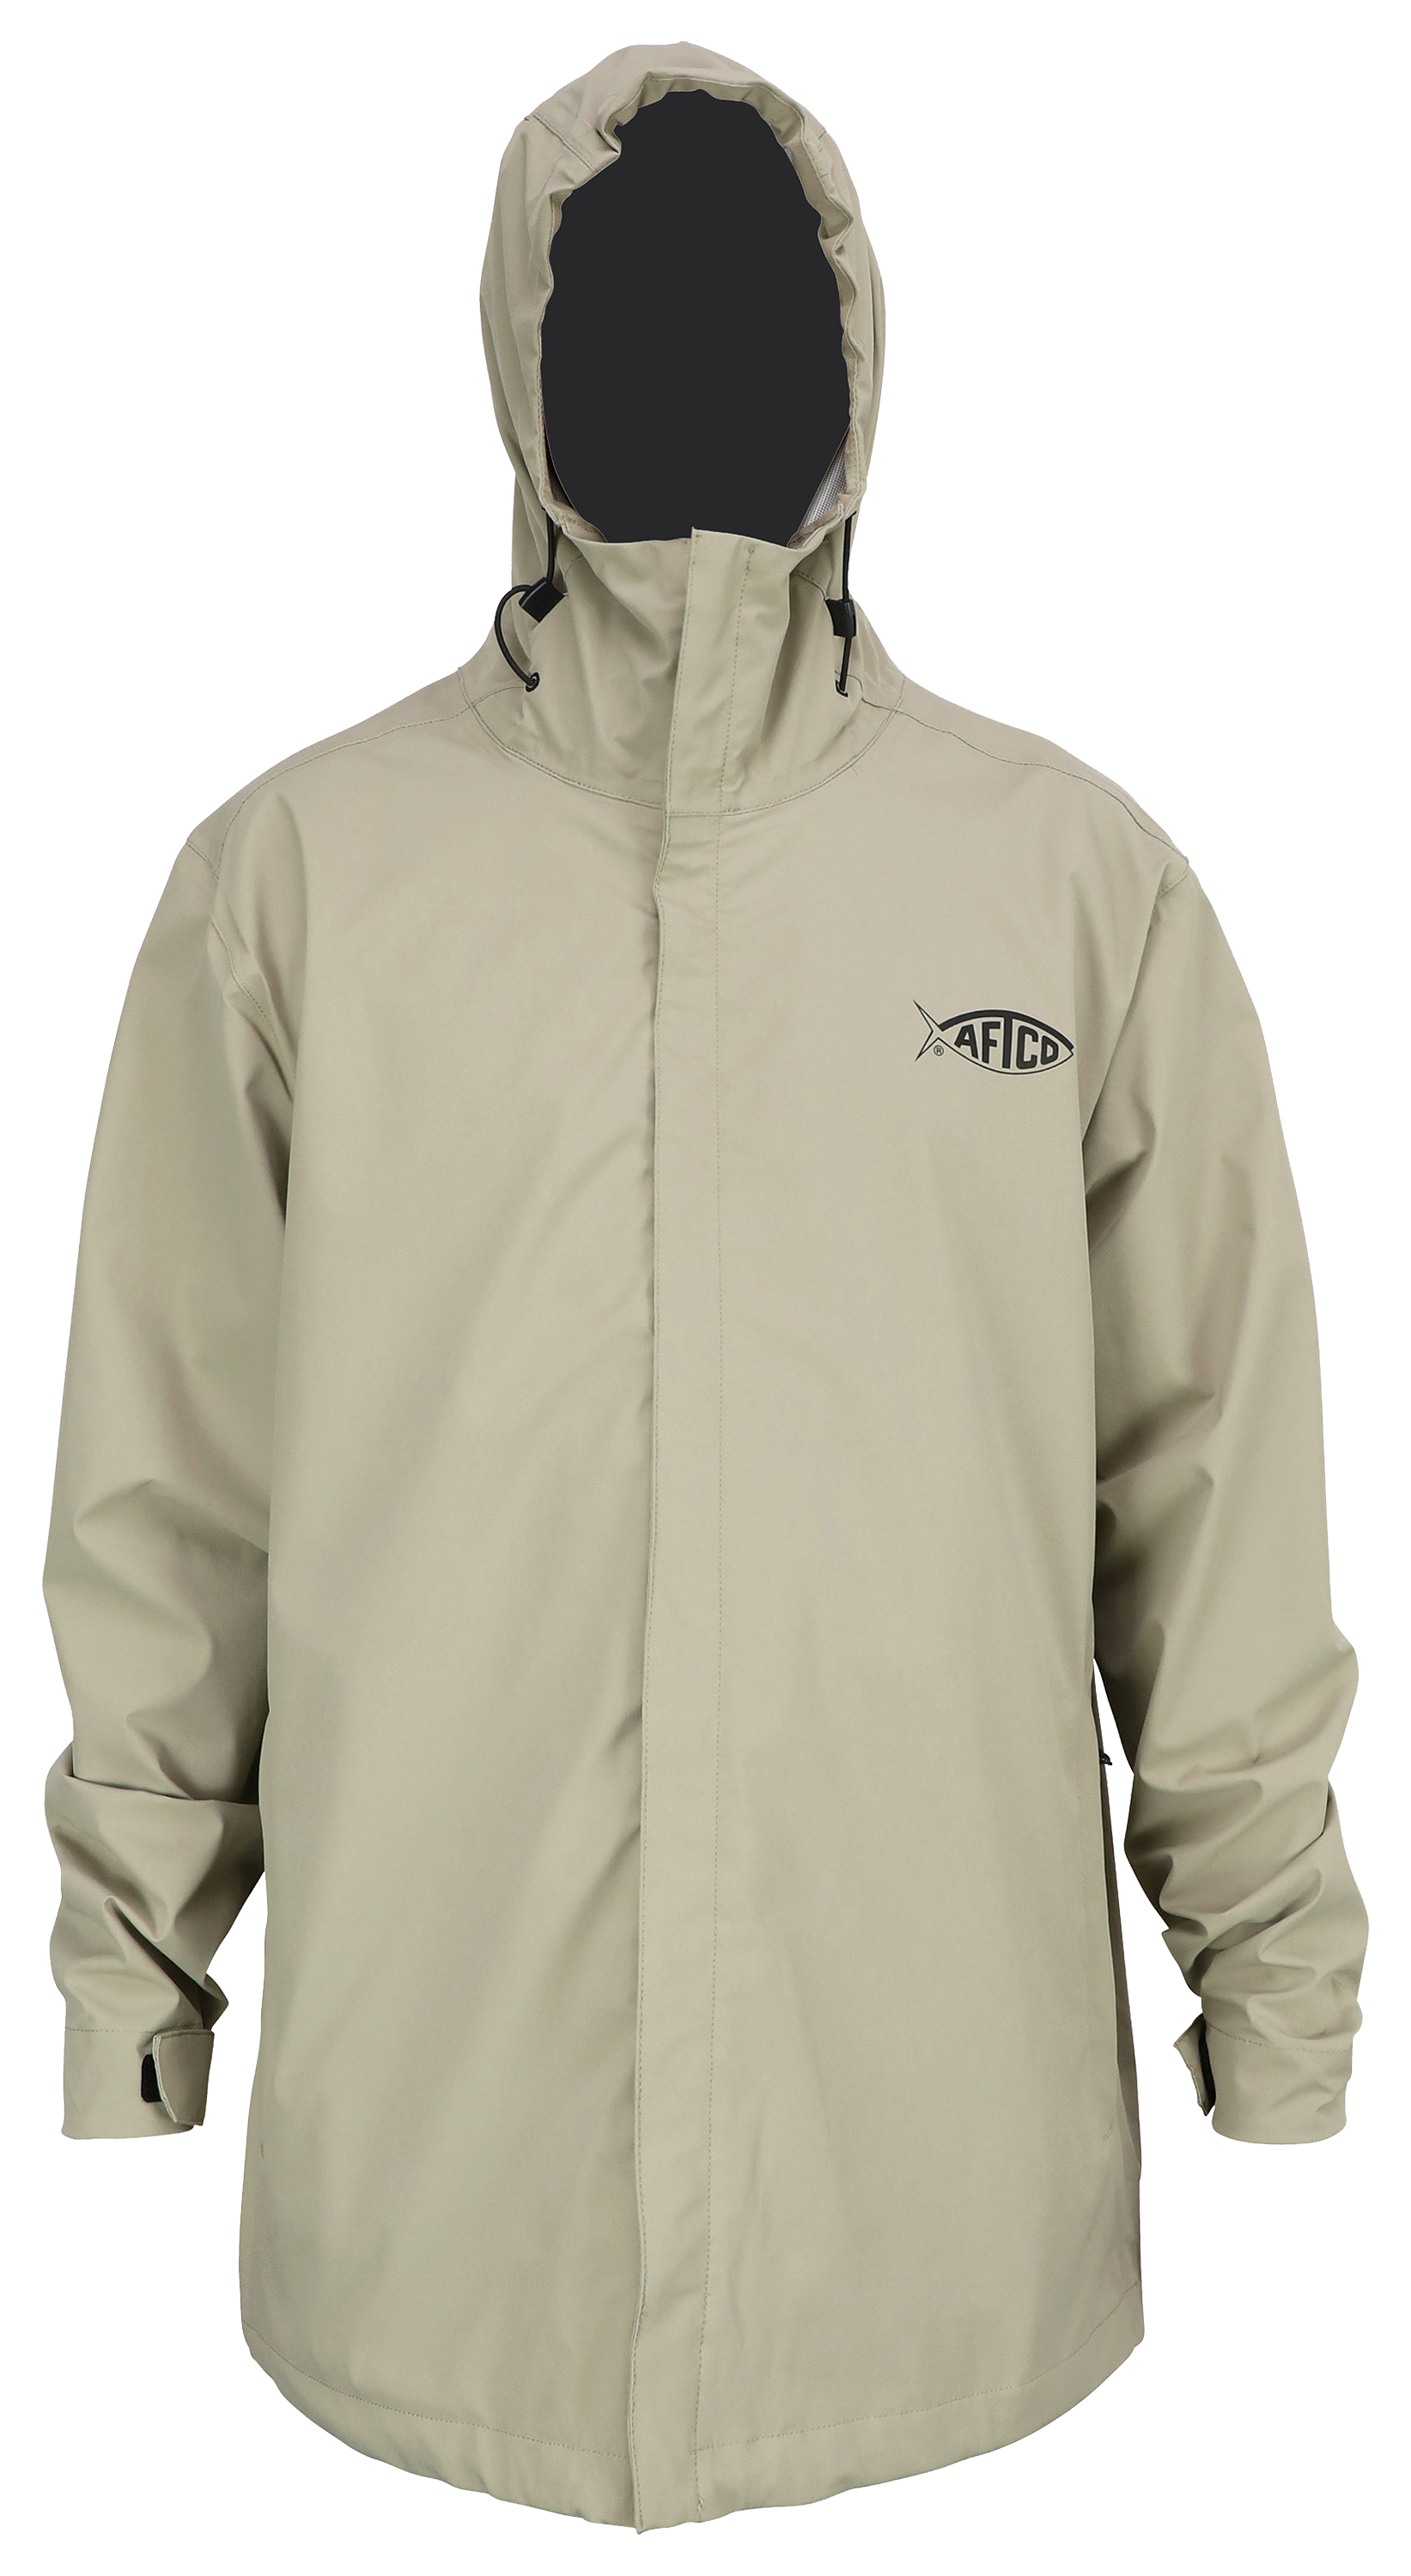 AFTCO Transformer Shell Jacket for Men